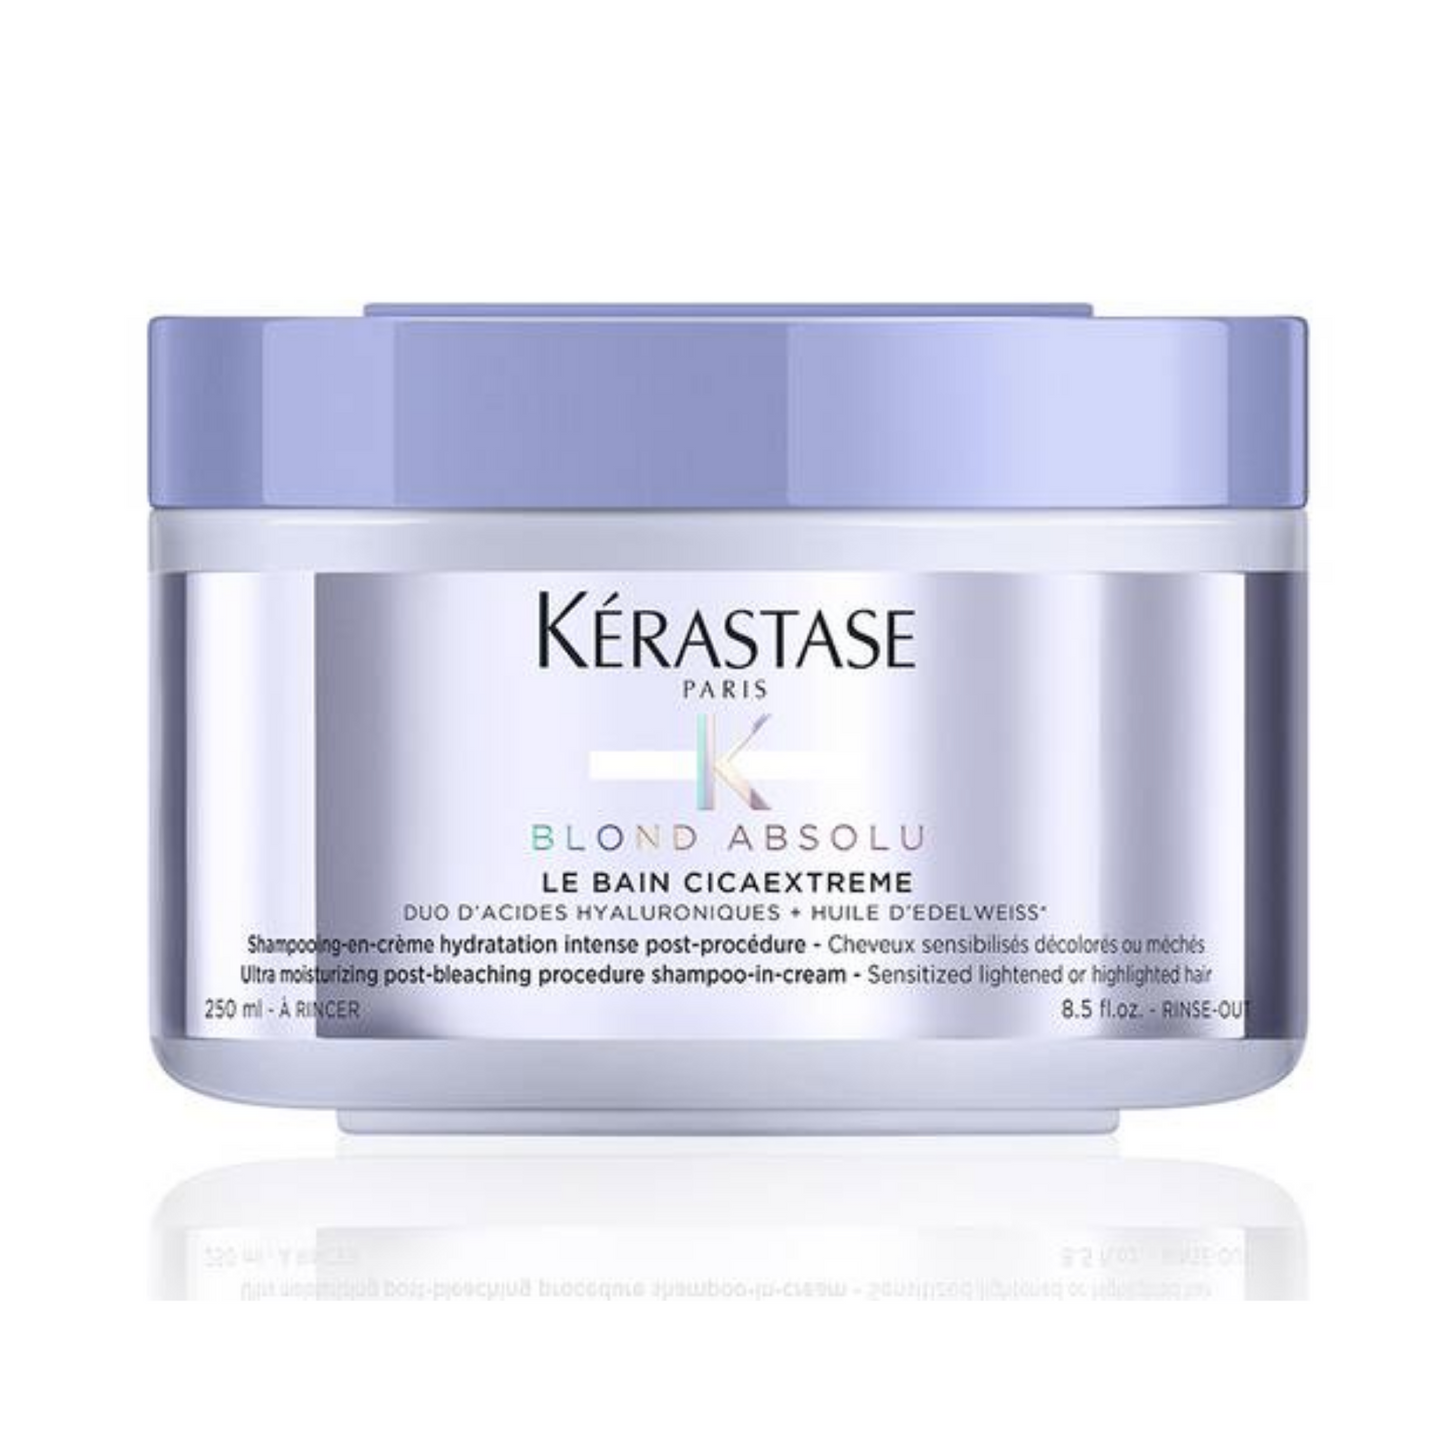 Kérastase Blond Absolu Cicaextreme Shampoo  - Ultra-moisturizing post-bleaching procedure shampoo-in-cream for sensitized lightened or highlighted hair.